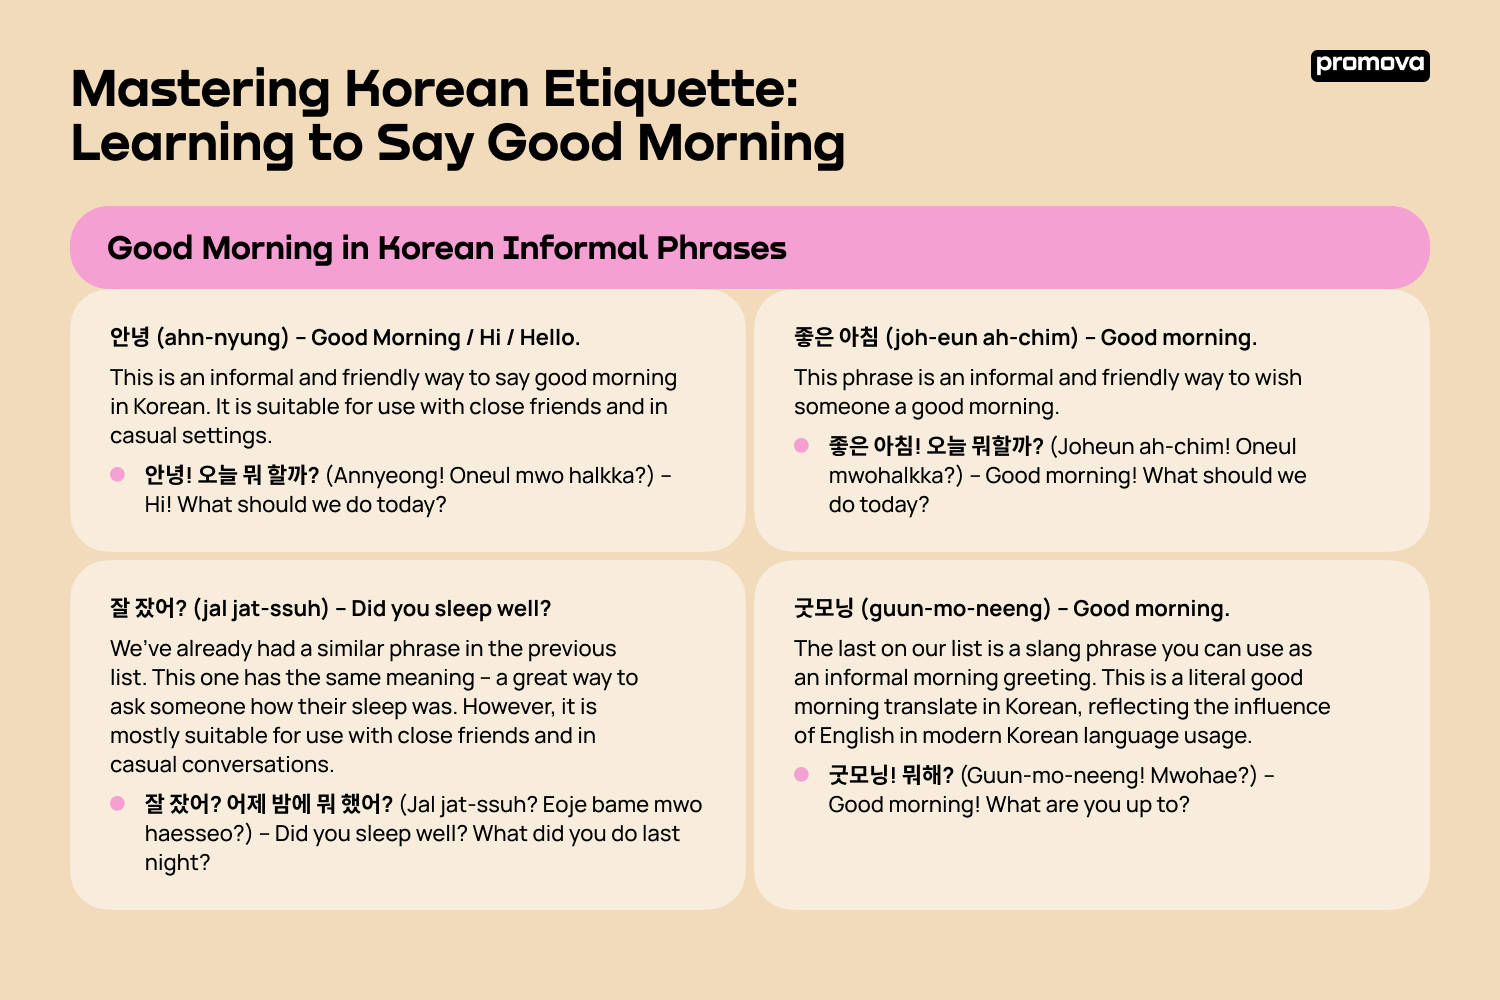 Discover Korean Good Morning Informal Phrases